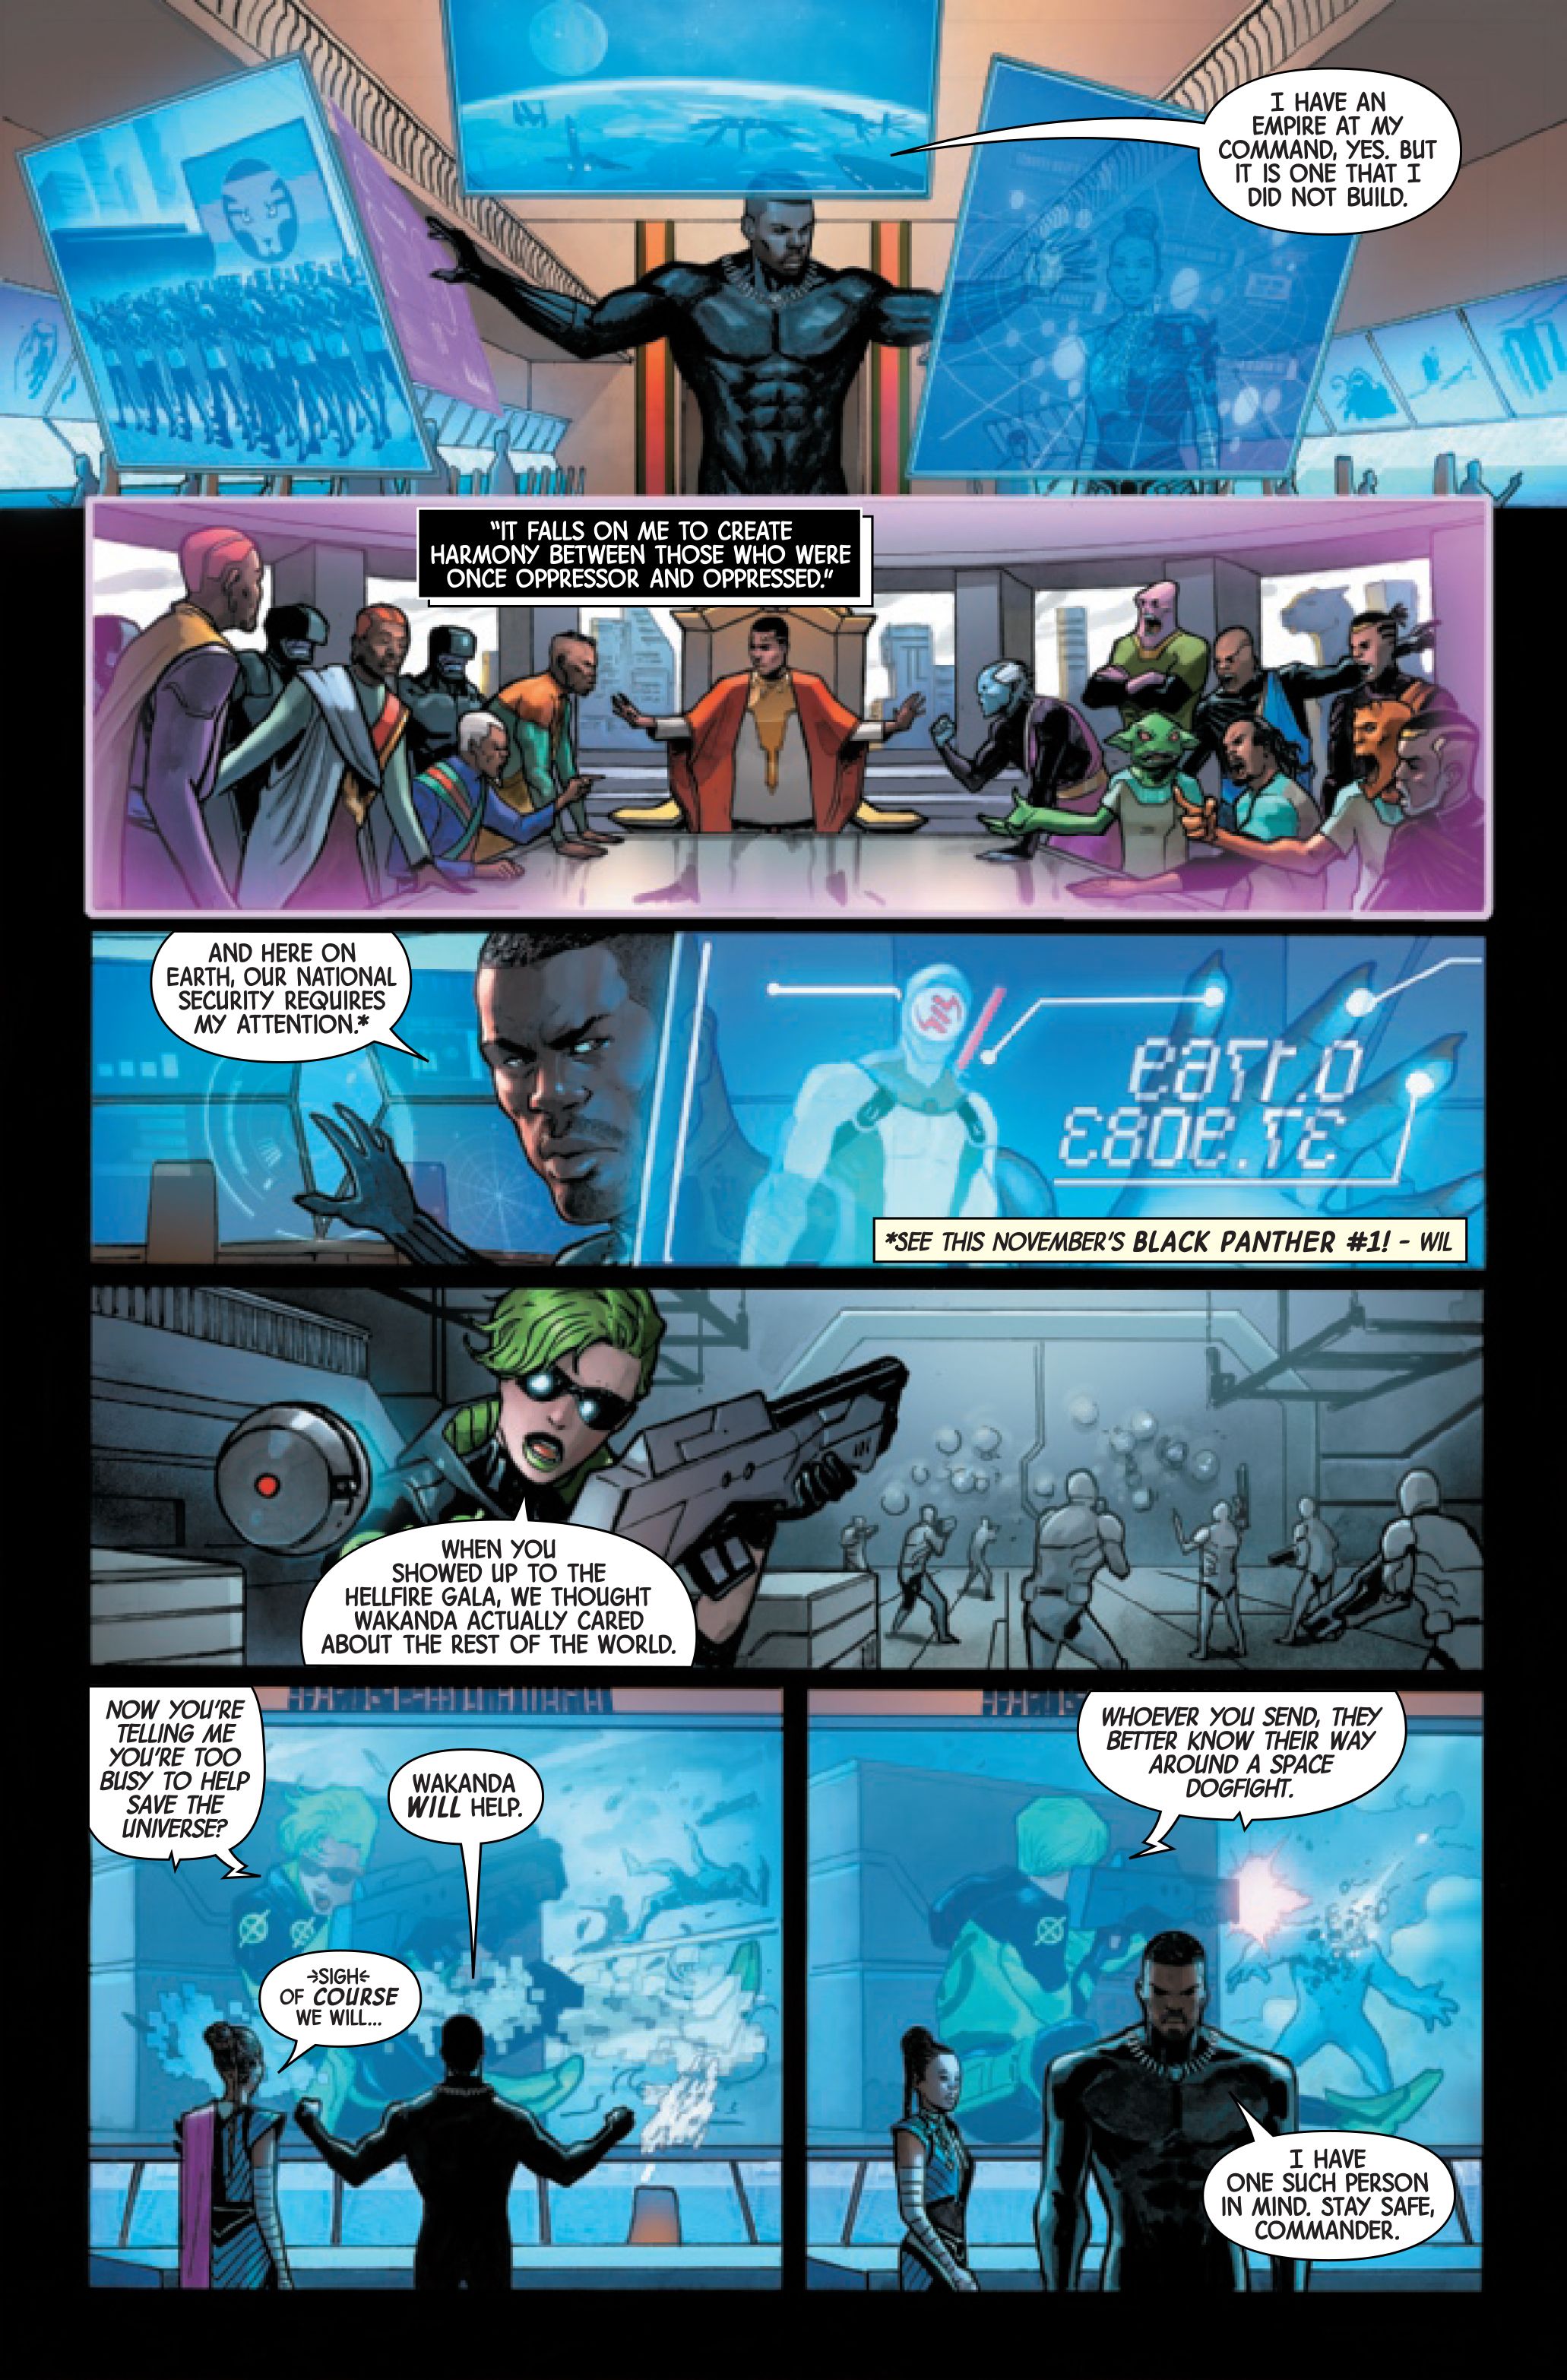 Page 5 of The Last Annihilation: Wakanda #1, by Evan Narcisse, Germán Peralta, Jesus Aburtov and VC's Cory Petit